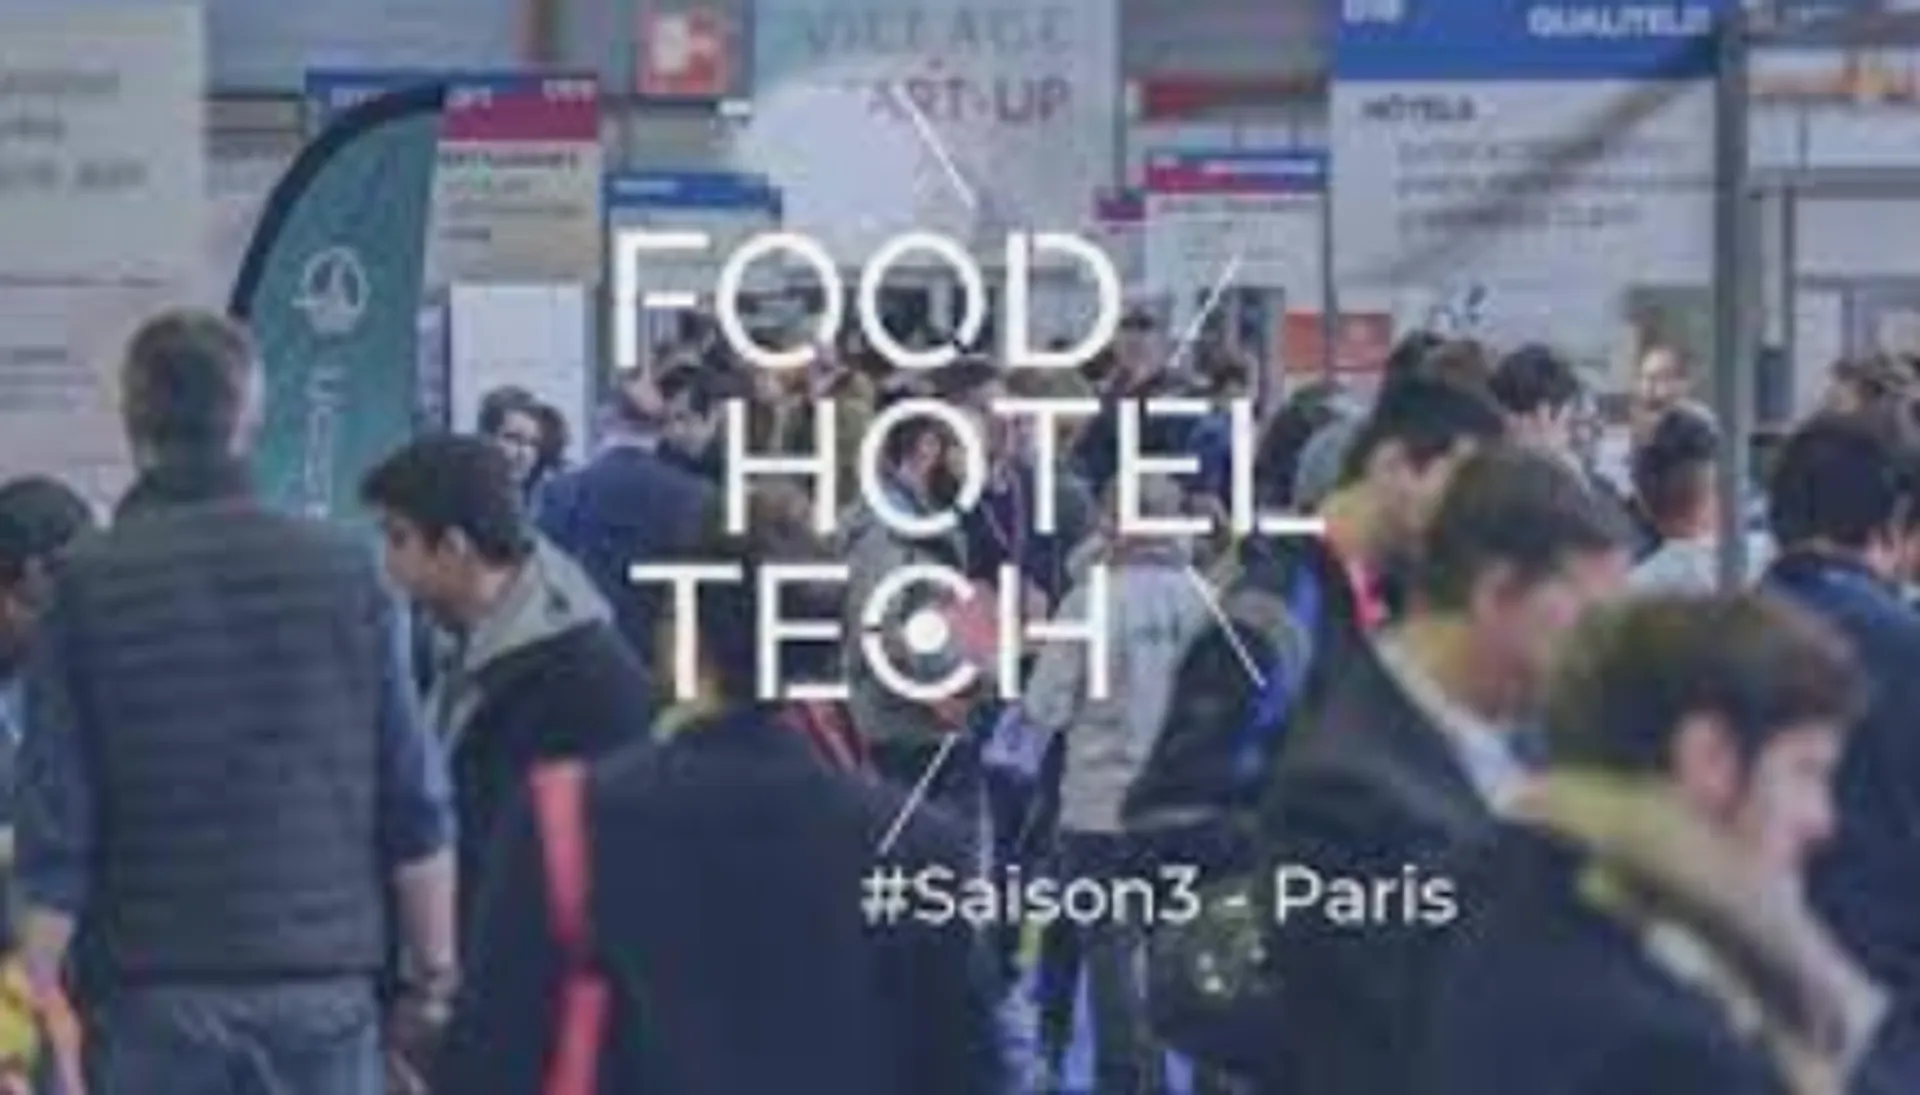 FOOD HOTEL TECH - PARIS.-30195.png